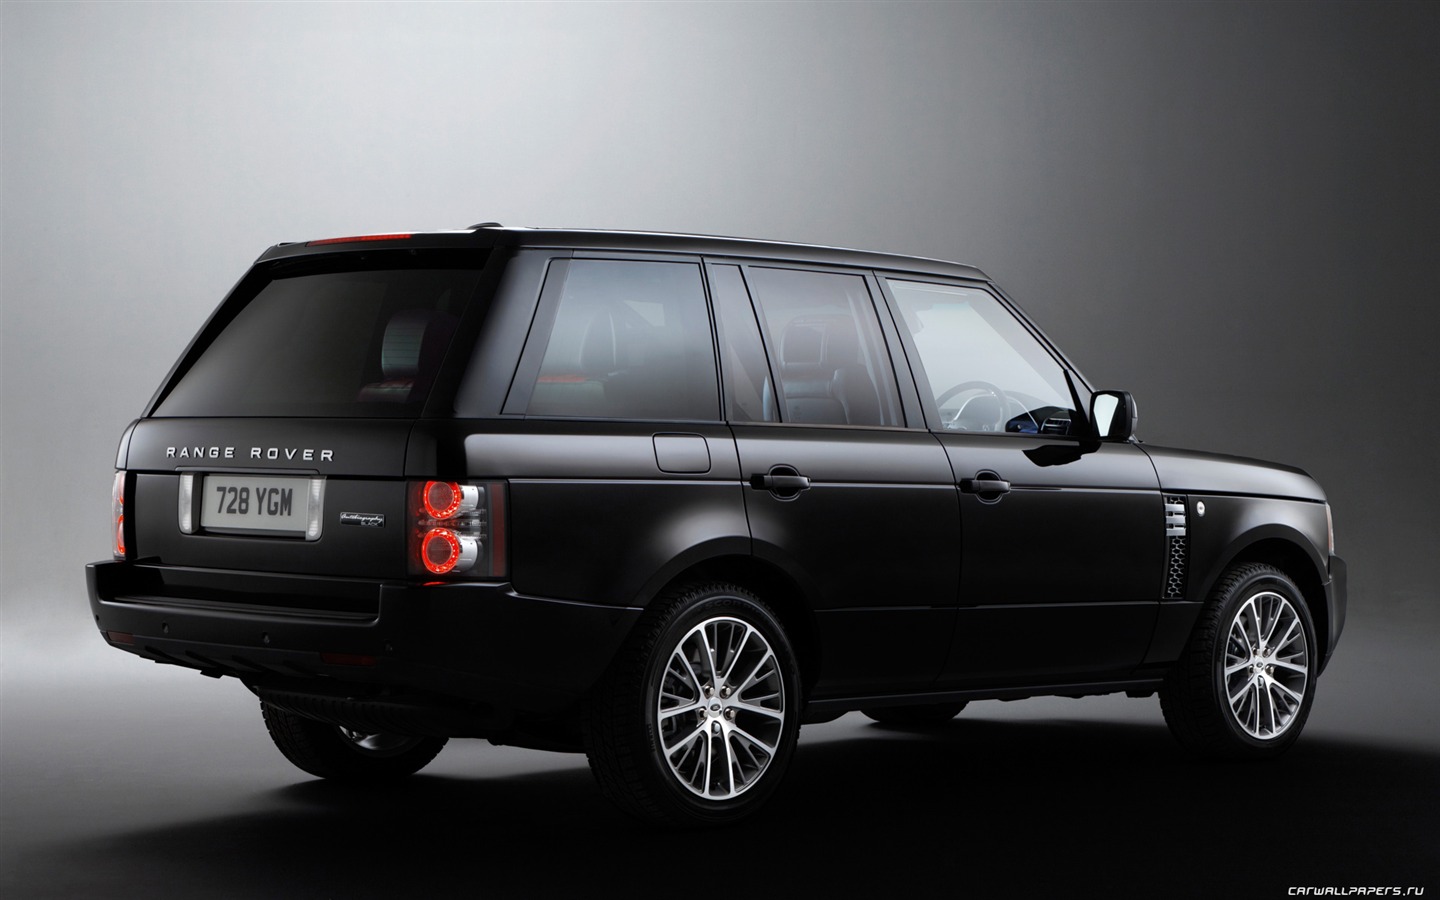 Land Rover Range Rover Black Edition - 2011 路虎19 - 1440x900